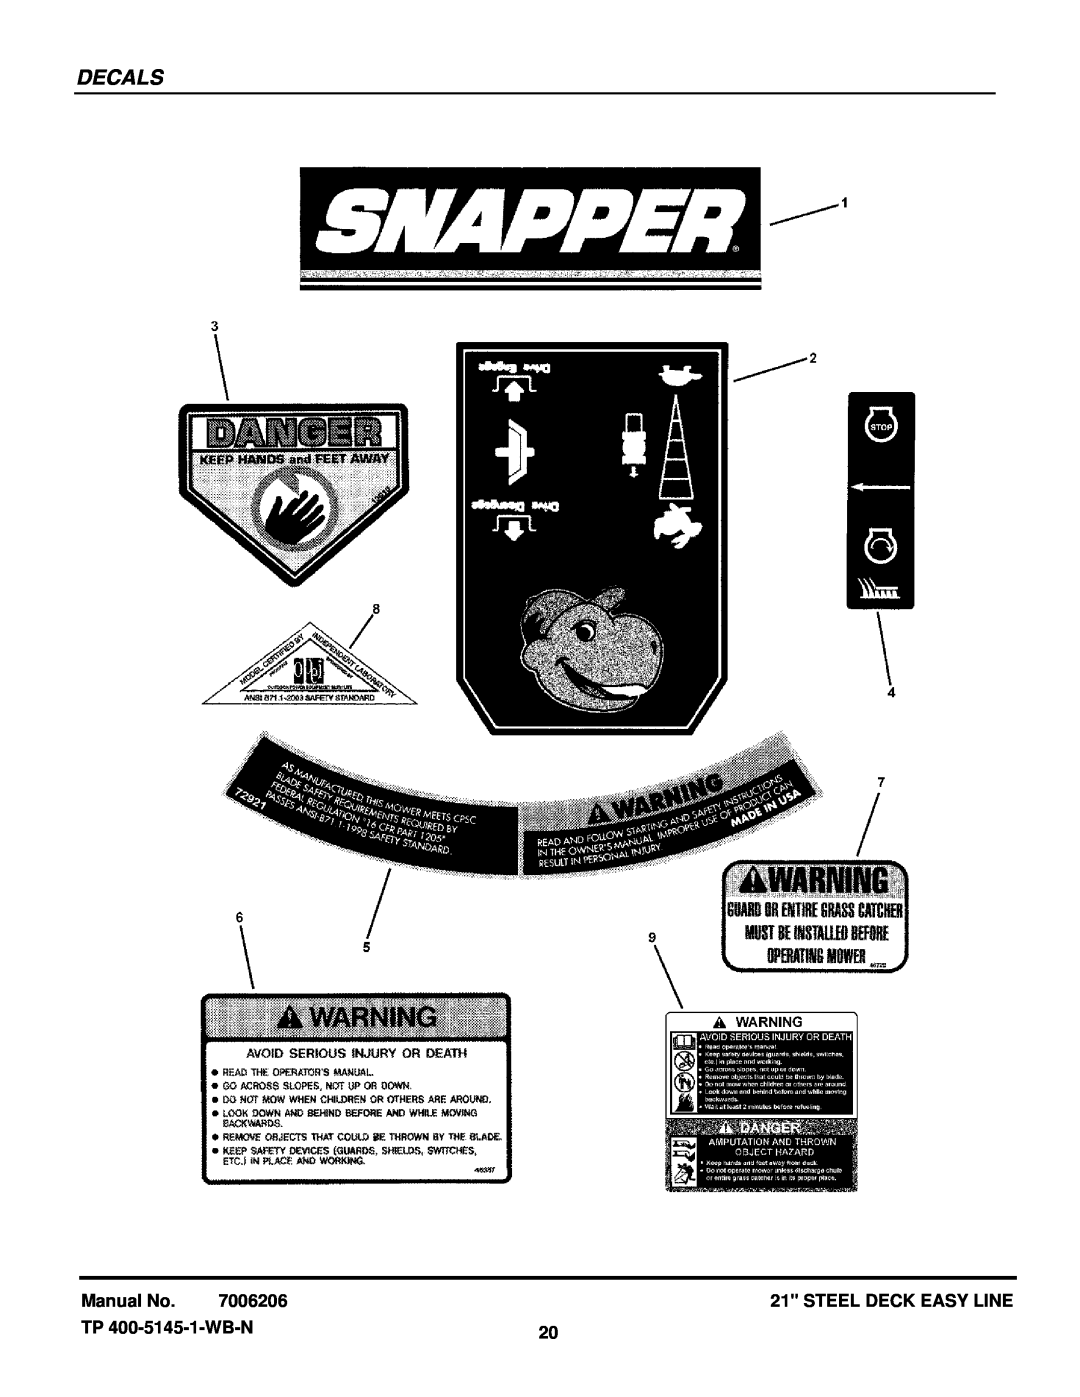 Snapper SPV211S, SPV21S manual Decals, Manual No, 7006206, Steel Deck Easy Line, TP 400-5145-1-WB-N 